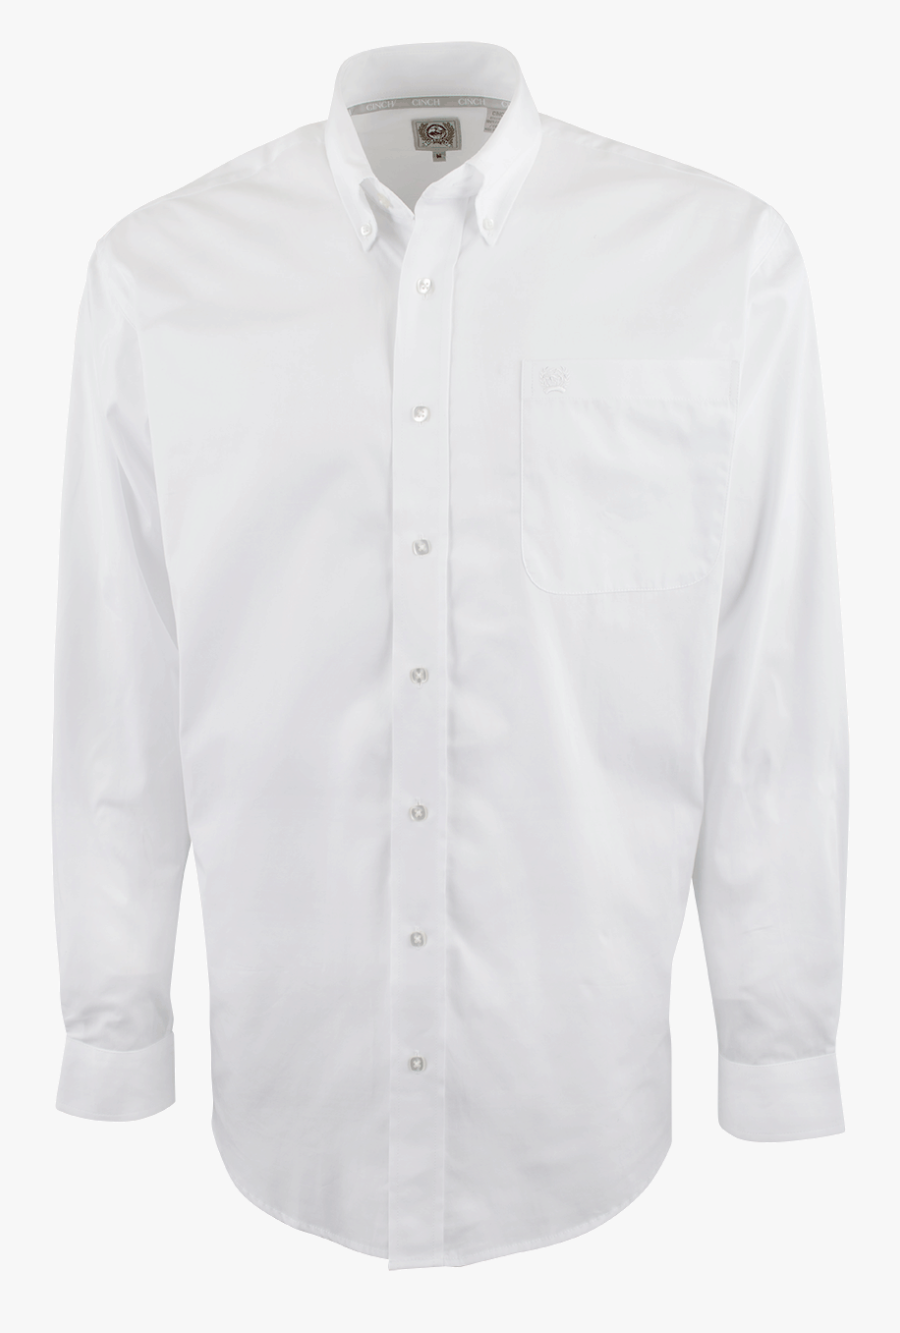 Clipart Library Shirt Clip Cinch - Men White Long Sleeve Shirt For Work, Transparent Clipart